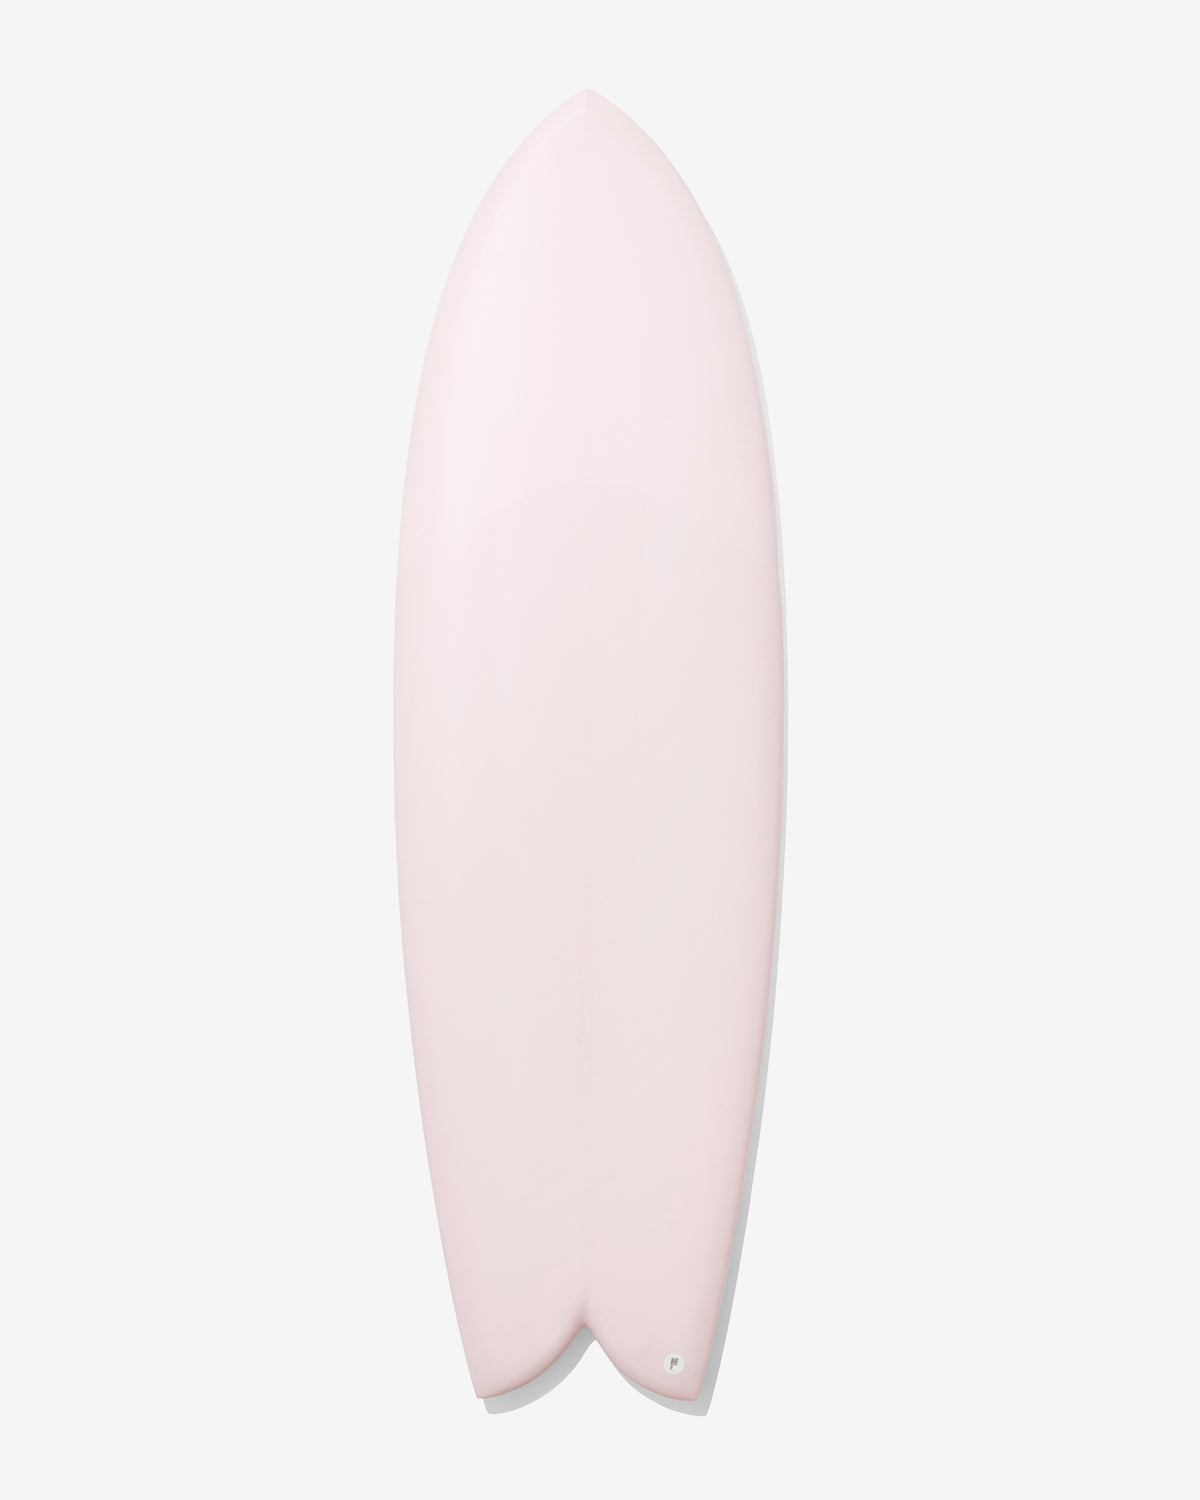 AO Surfboard